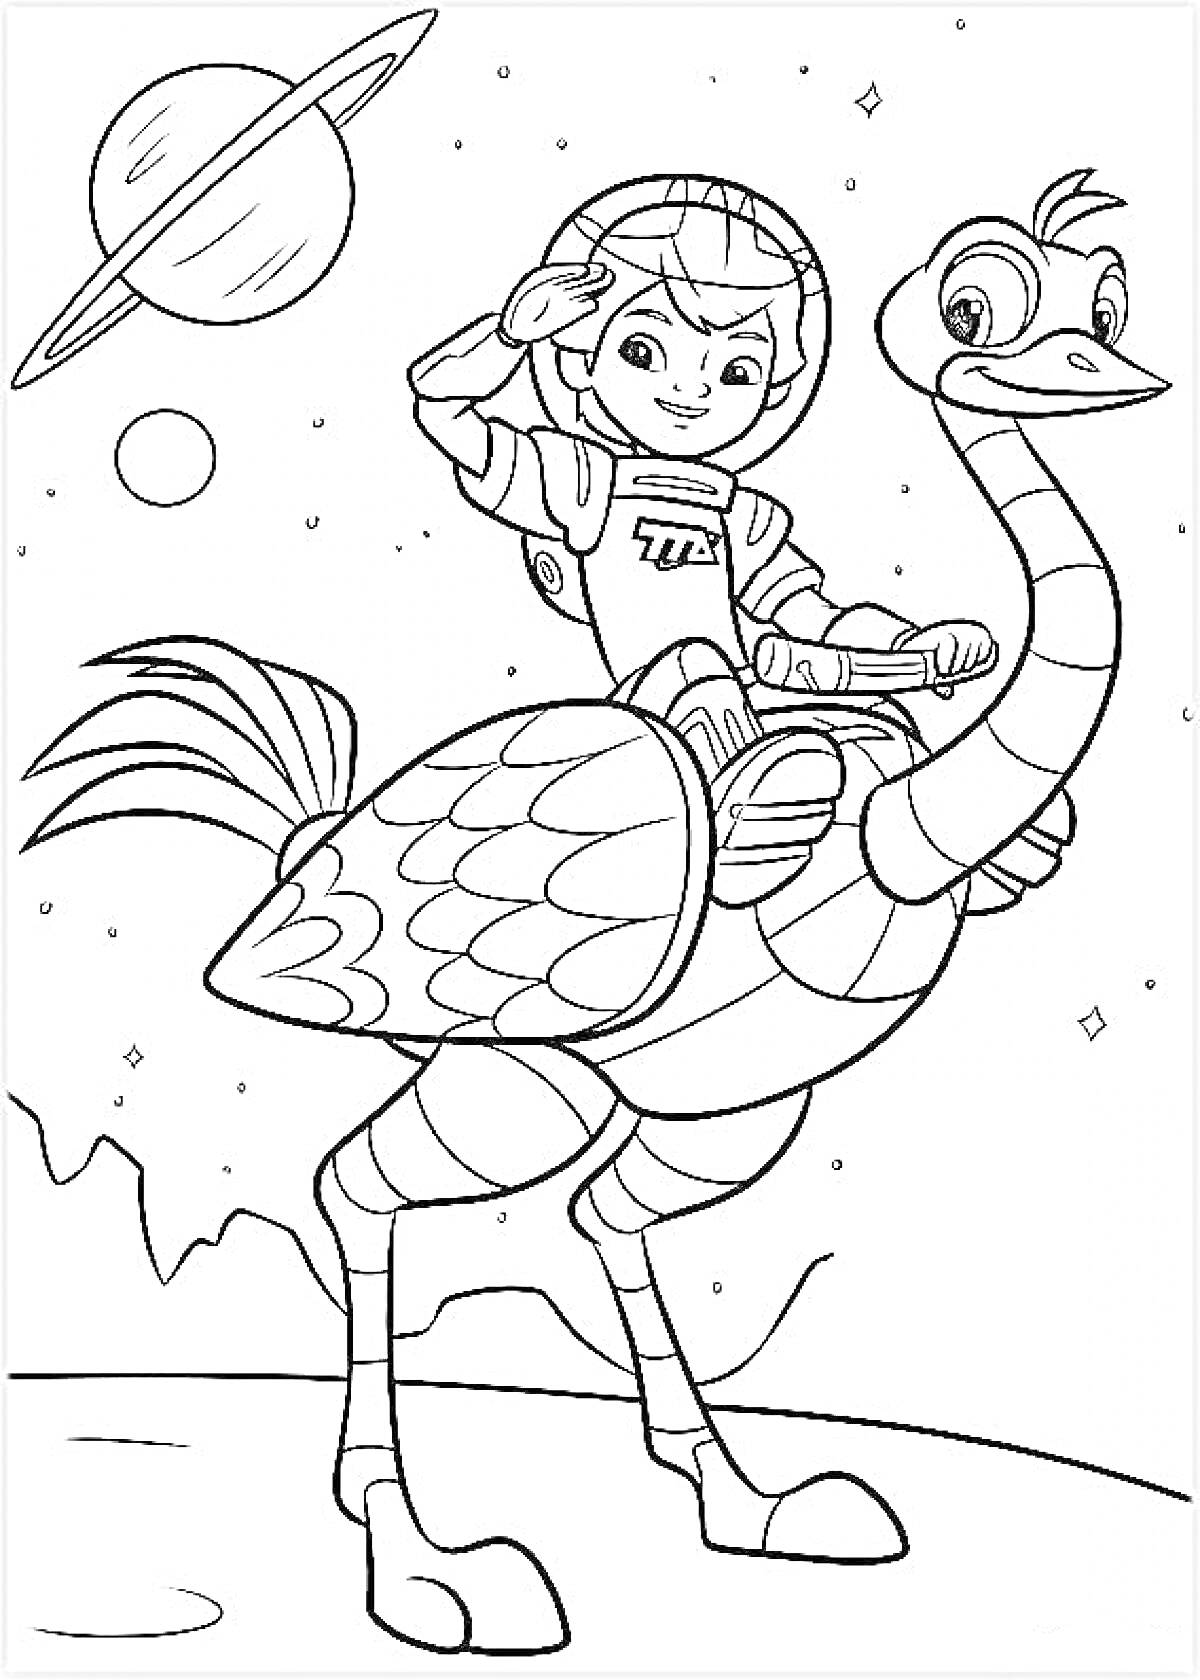 Майлз в космическом костюме на механическом страусе на другой планете, на заднем плане планета и звезды